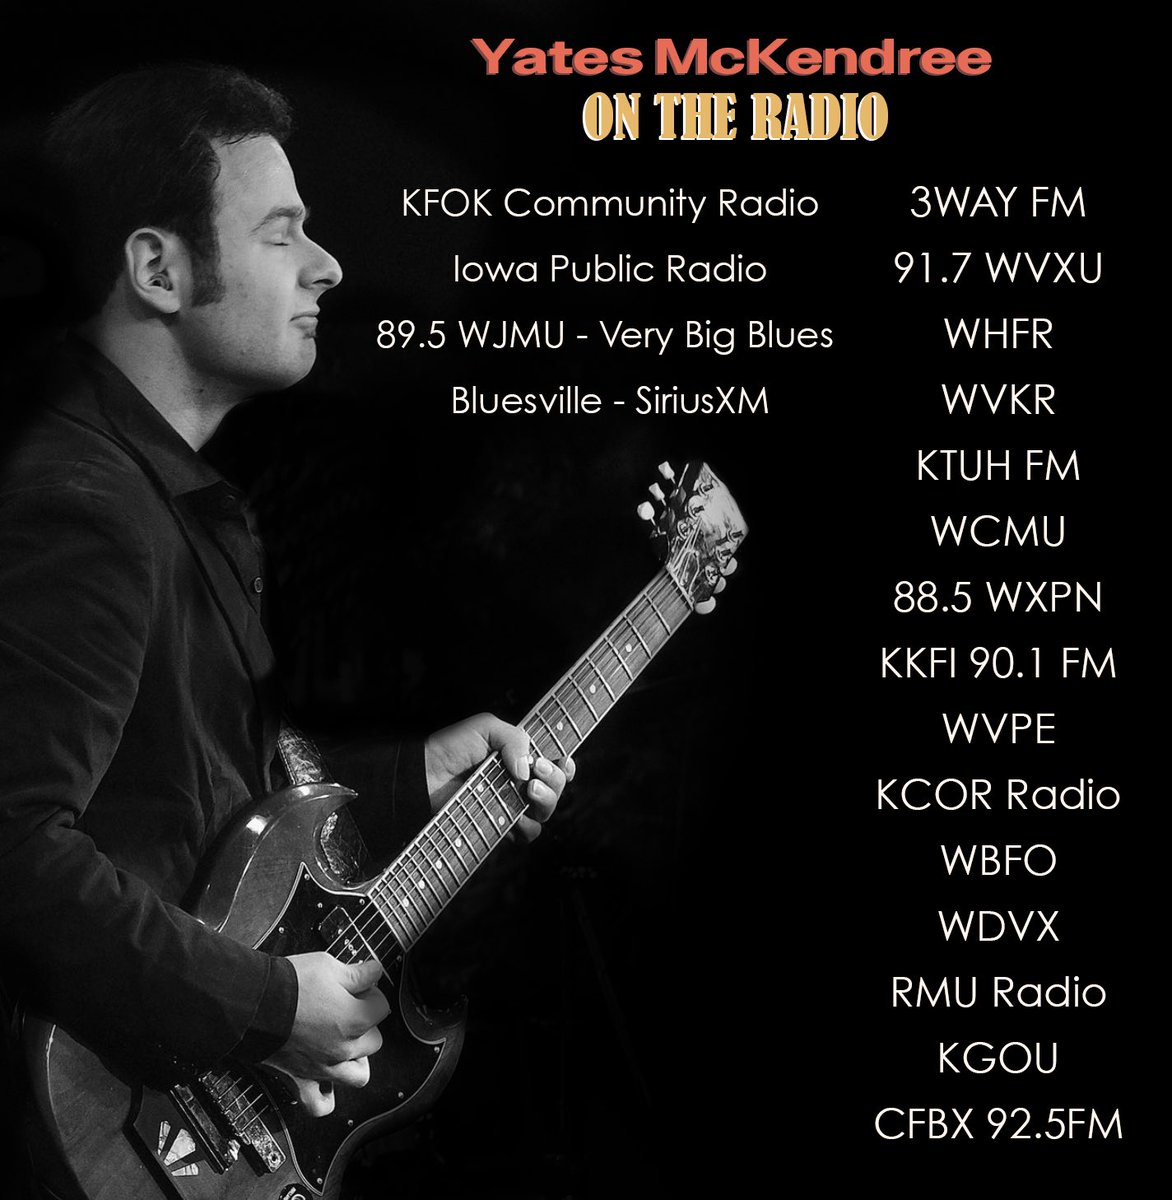 Huge thank you to these radio stations for keeping Yates McKendree’s @buchananlaneLP in your rotation the past few months:

@3WAYFM
@VeryBigBlues
@917wvxu
@ktuhfm
@WCMUNews
@CFBXRadio
@WBFO
@KCORRadio
@IowaPublicRadio
@wxpnfm
@kkfi901fm
@WVKRFM
@KFOKCommRadio